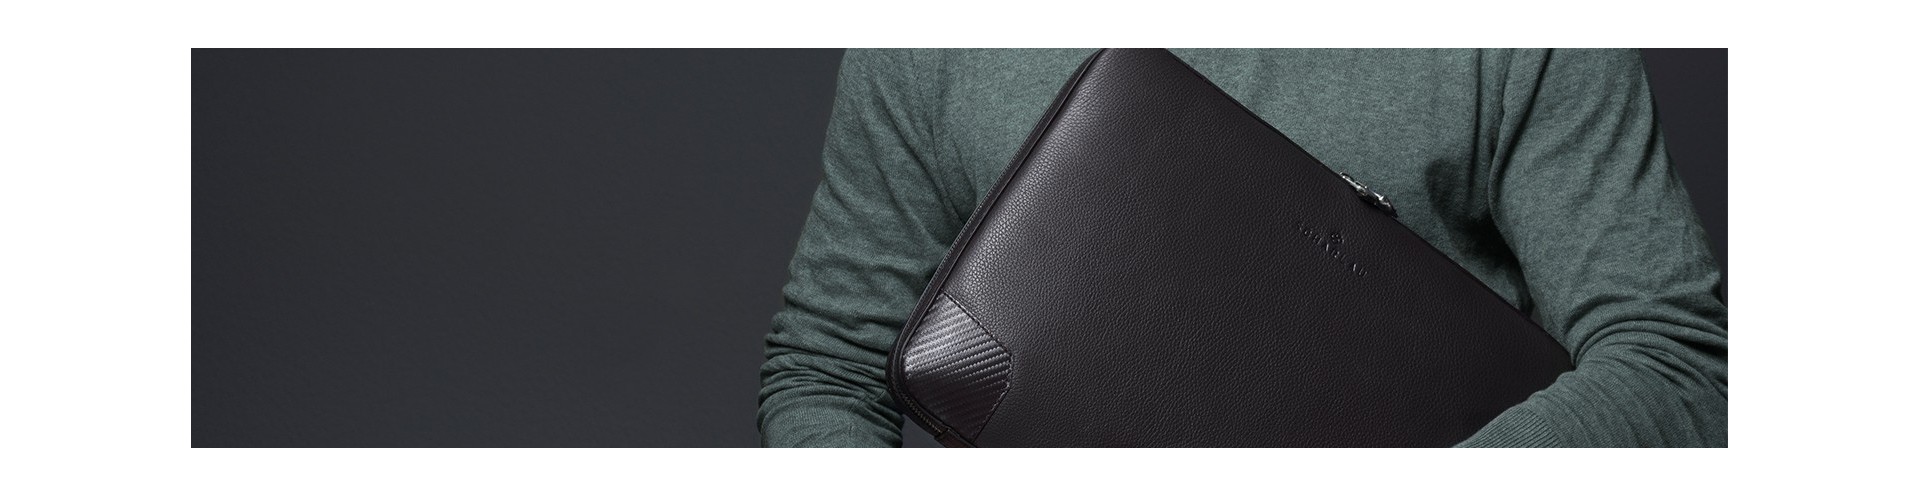 Leather Customizable Portafolios for Laptop